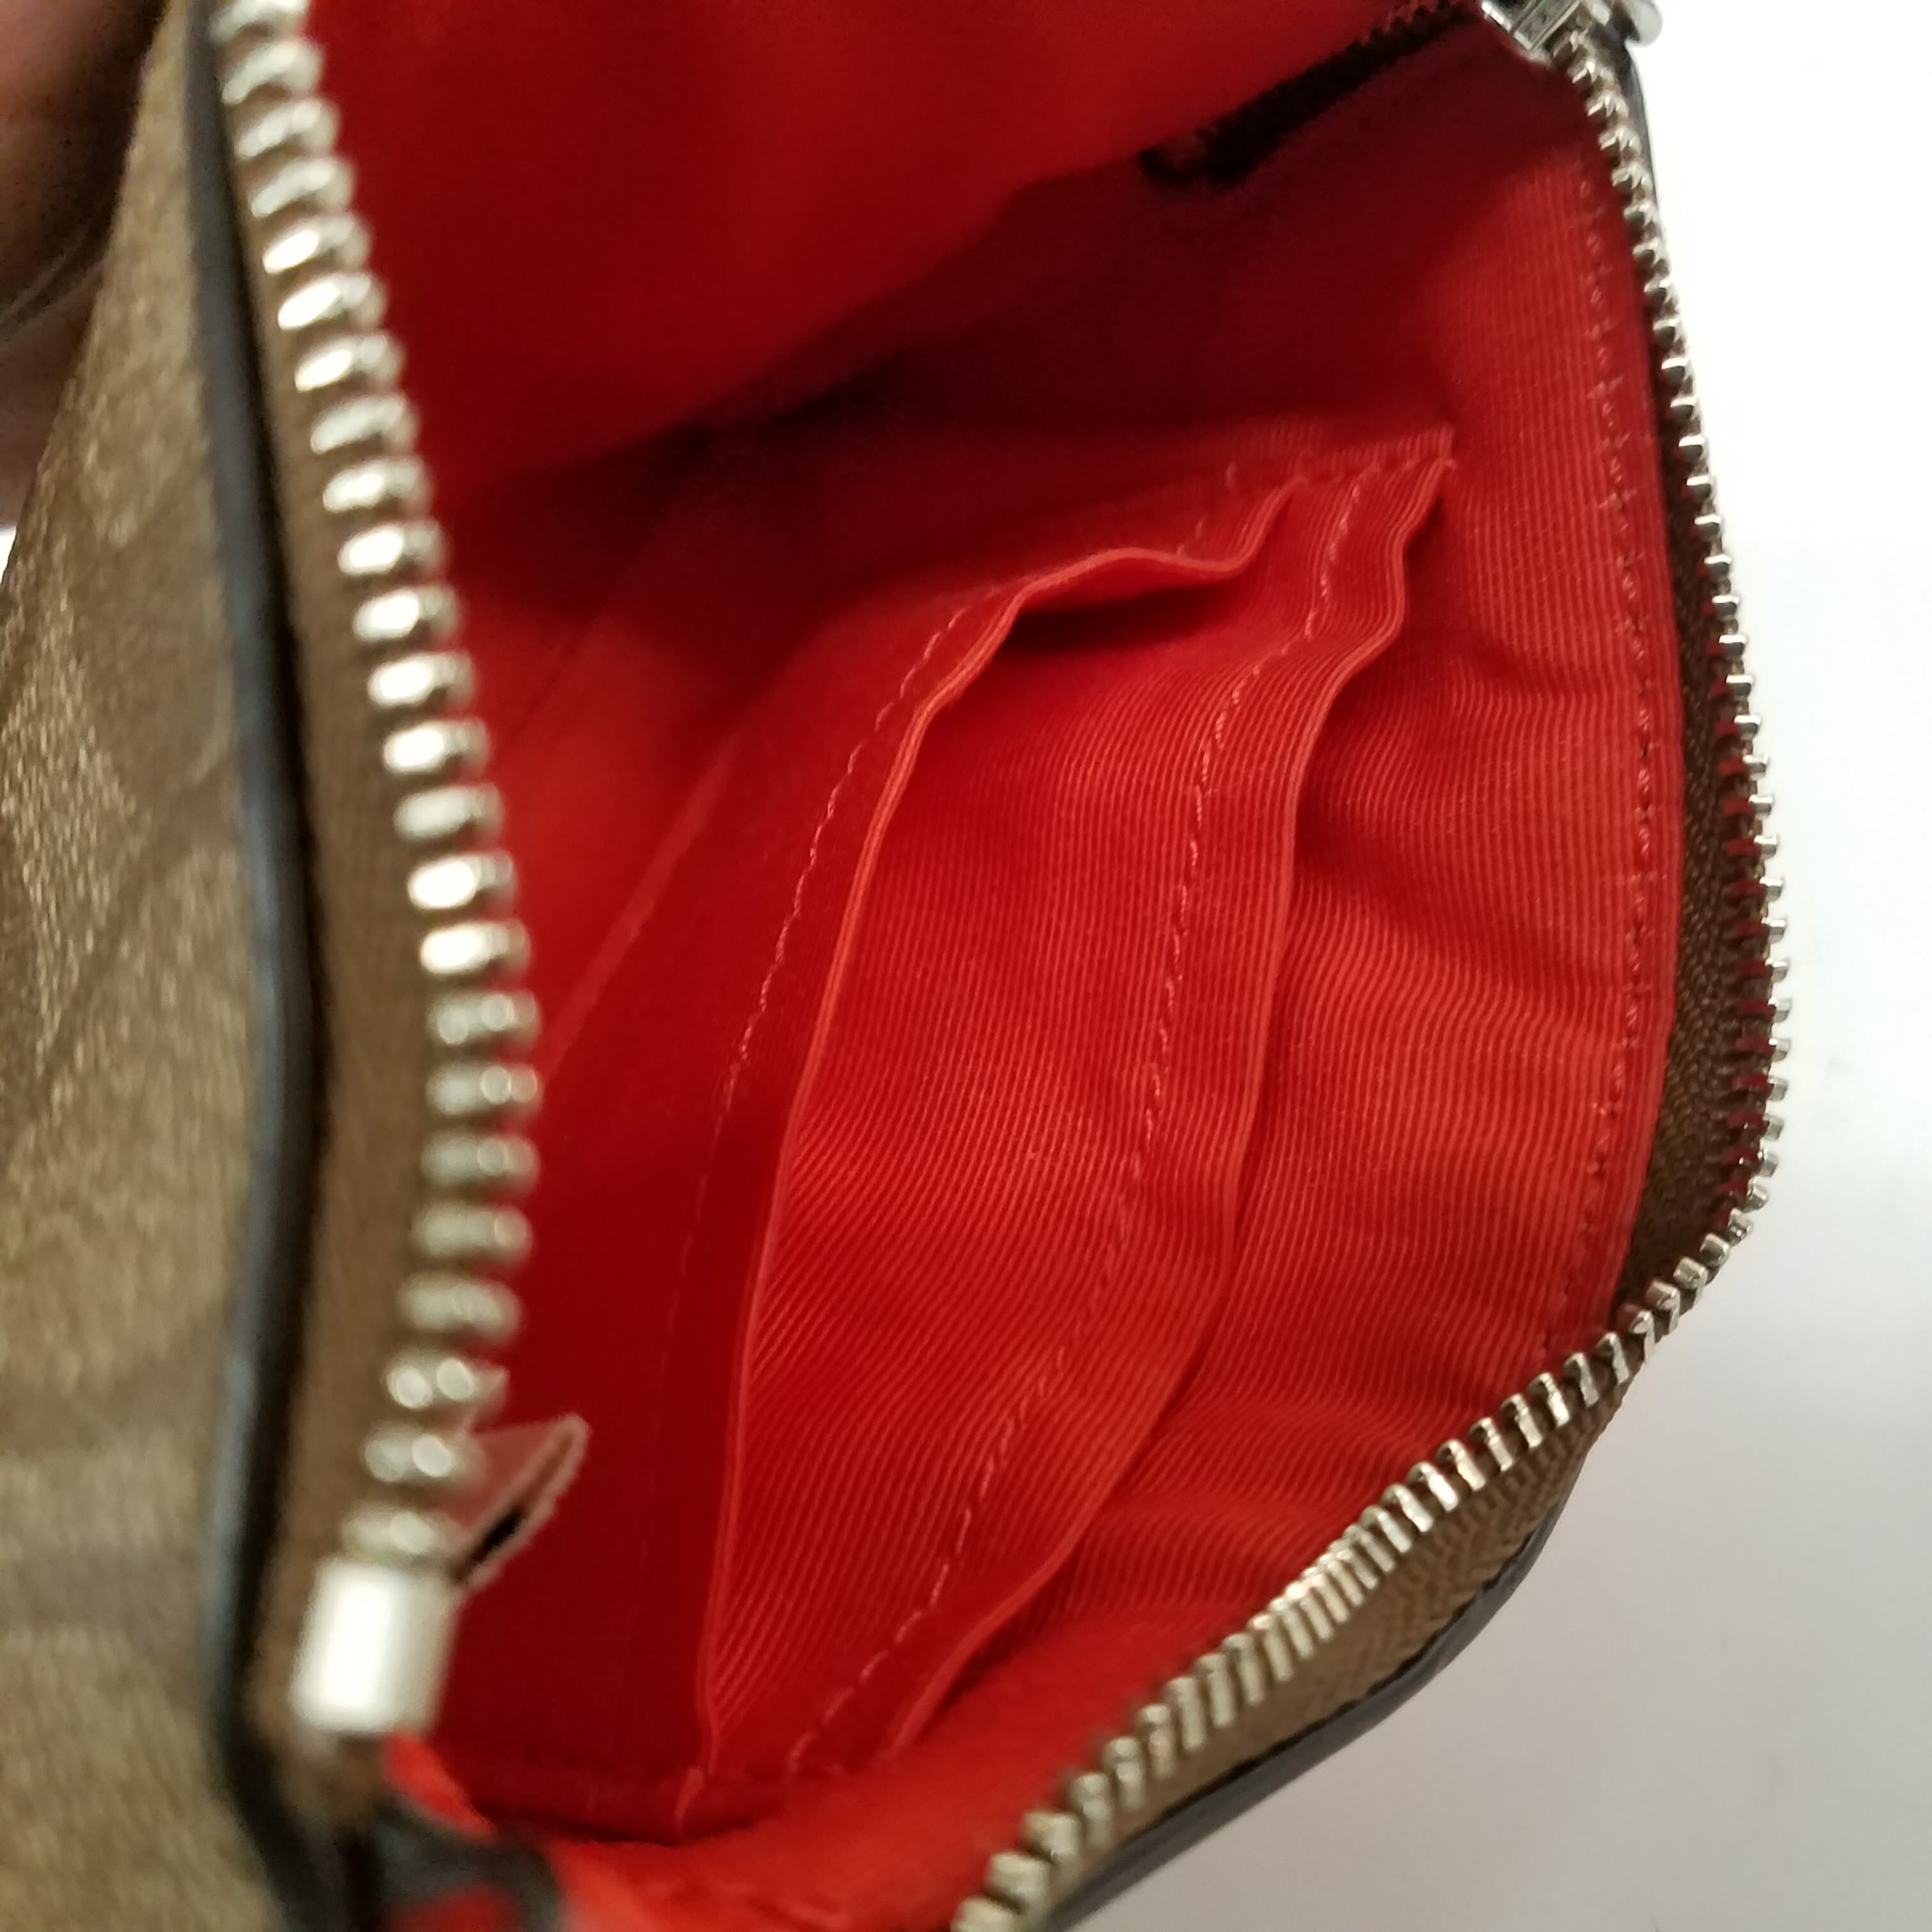 Coach coin purse - Bags and purses